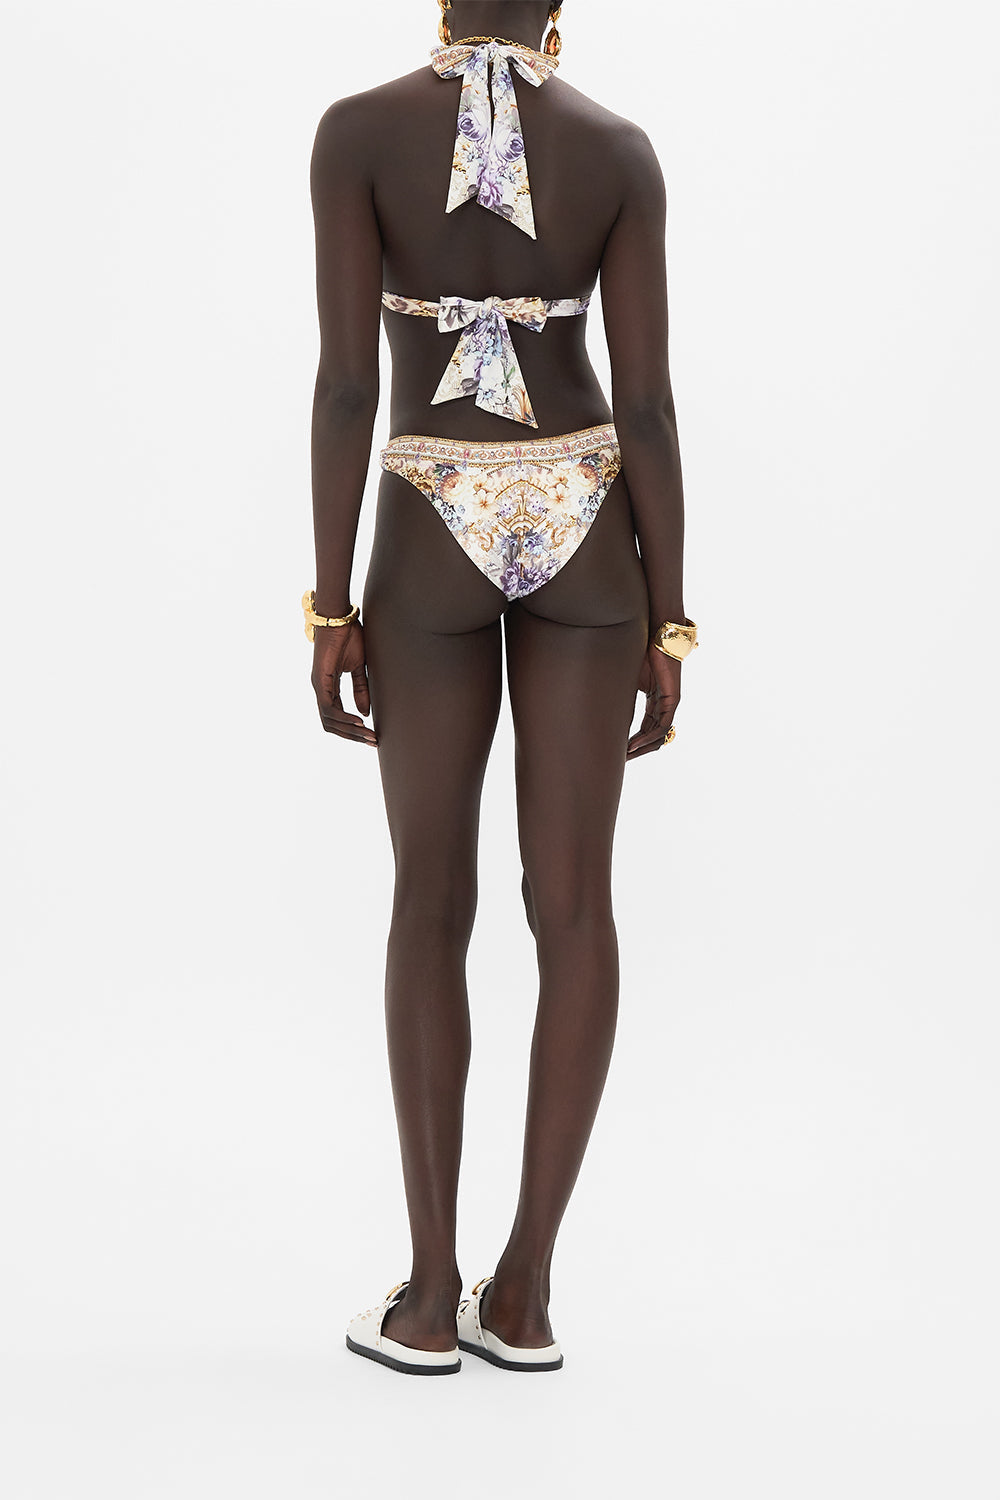 Back view of model wearing CAMILLA designer bikini in Sail Away With Me print